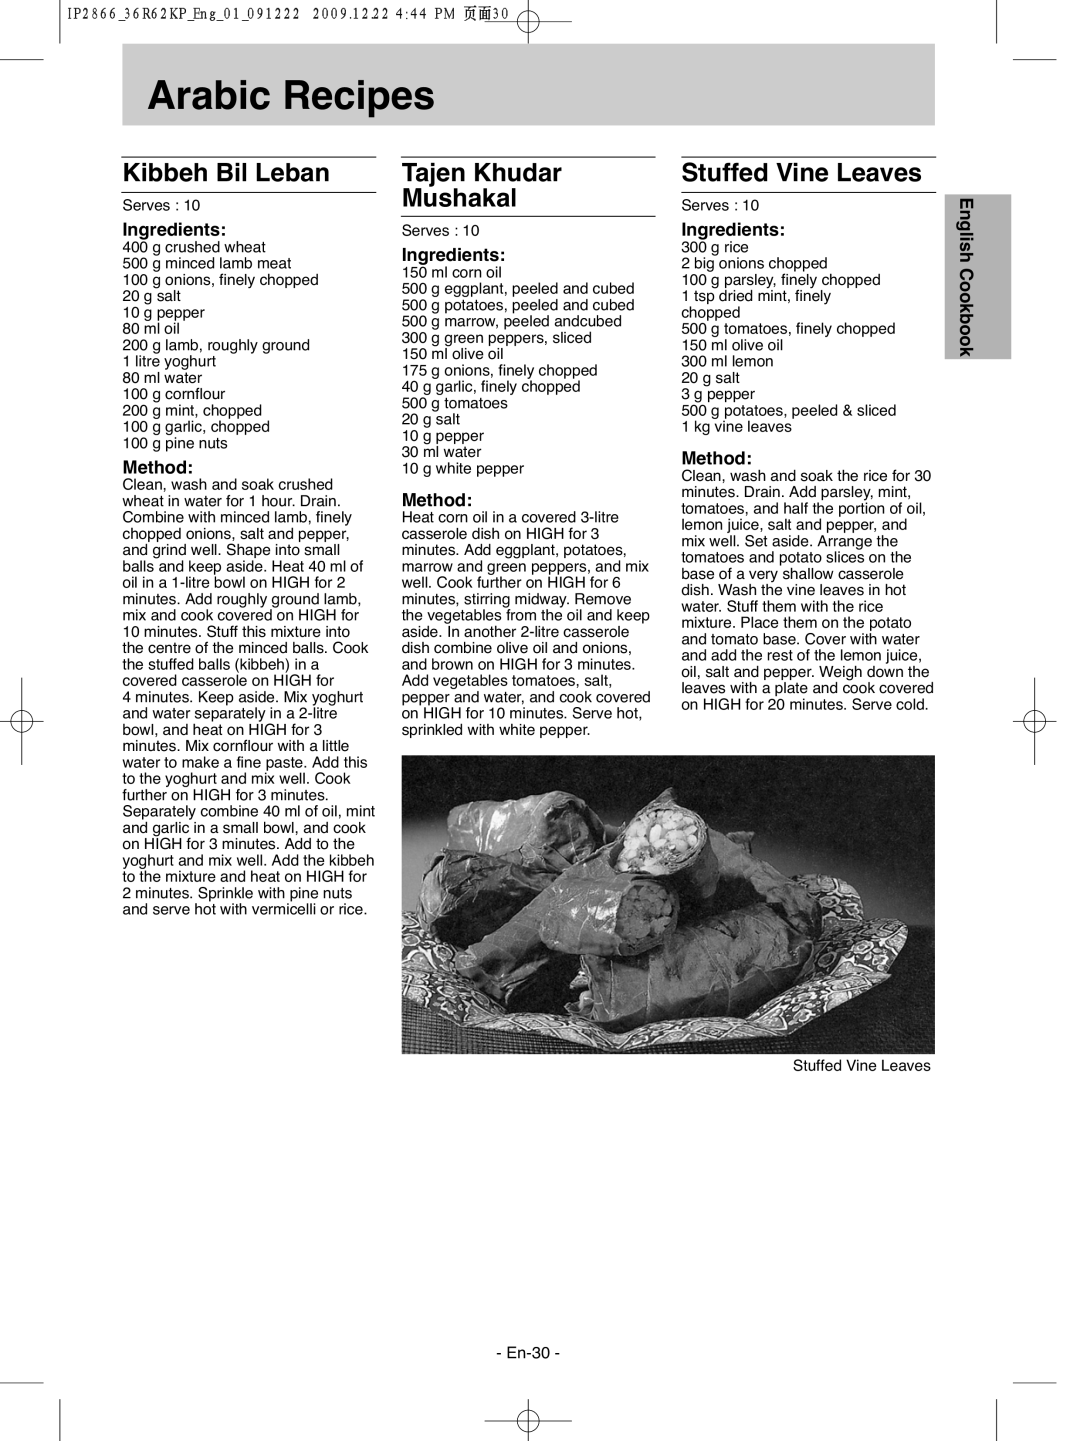 Panasonic NN-G335WF manual Kibbeh Bil Leban, Tajen Khudar Mushakal, Stuffed Vine Leaves, Arabic Recipes 